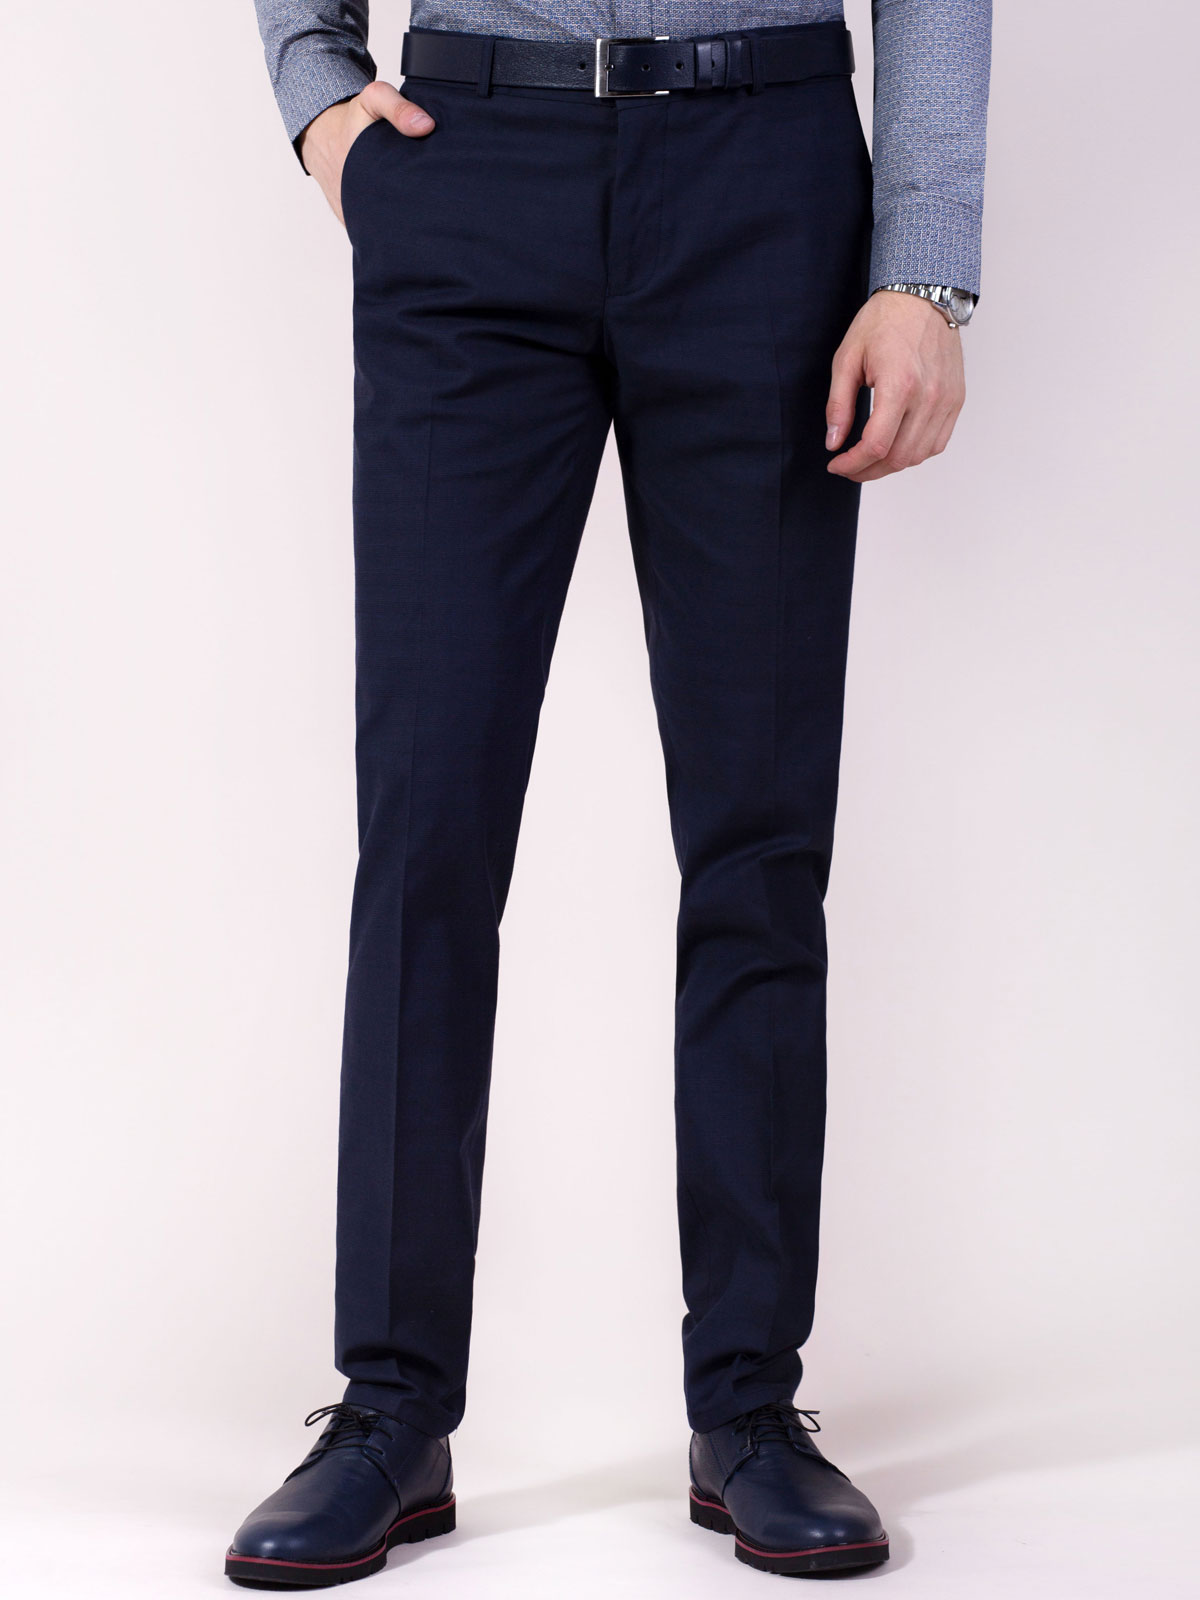 Formal Trouser: Check Men Navy Blue Cotton Formal Trouser at Cliths